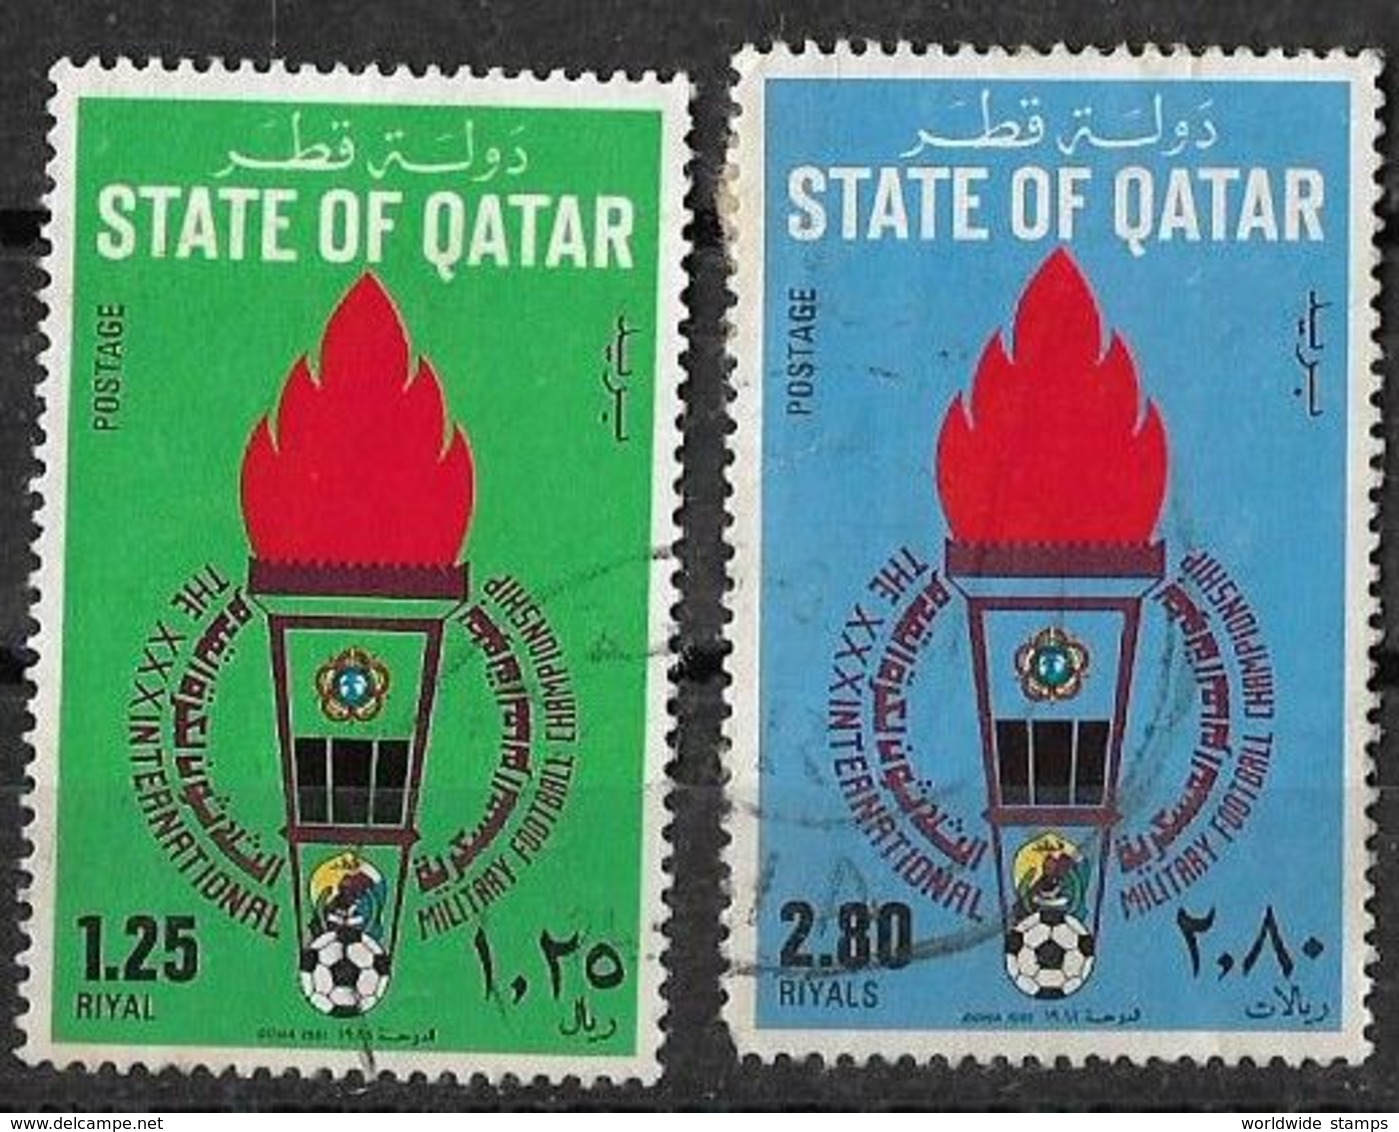 QATAR 1981-Military Football Championship, Set Of 2-USED S.G. 715-716, Cat £ 20-Used - Qatar